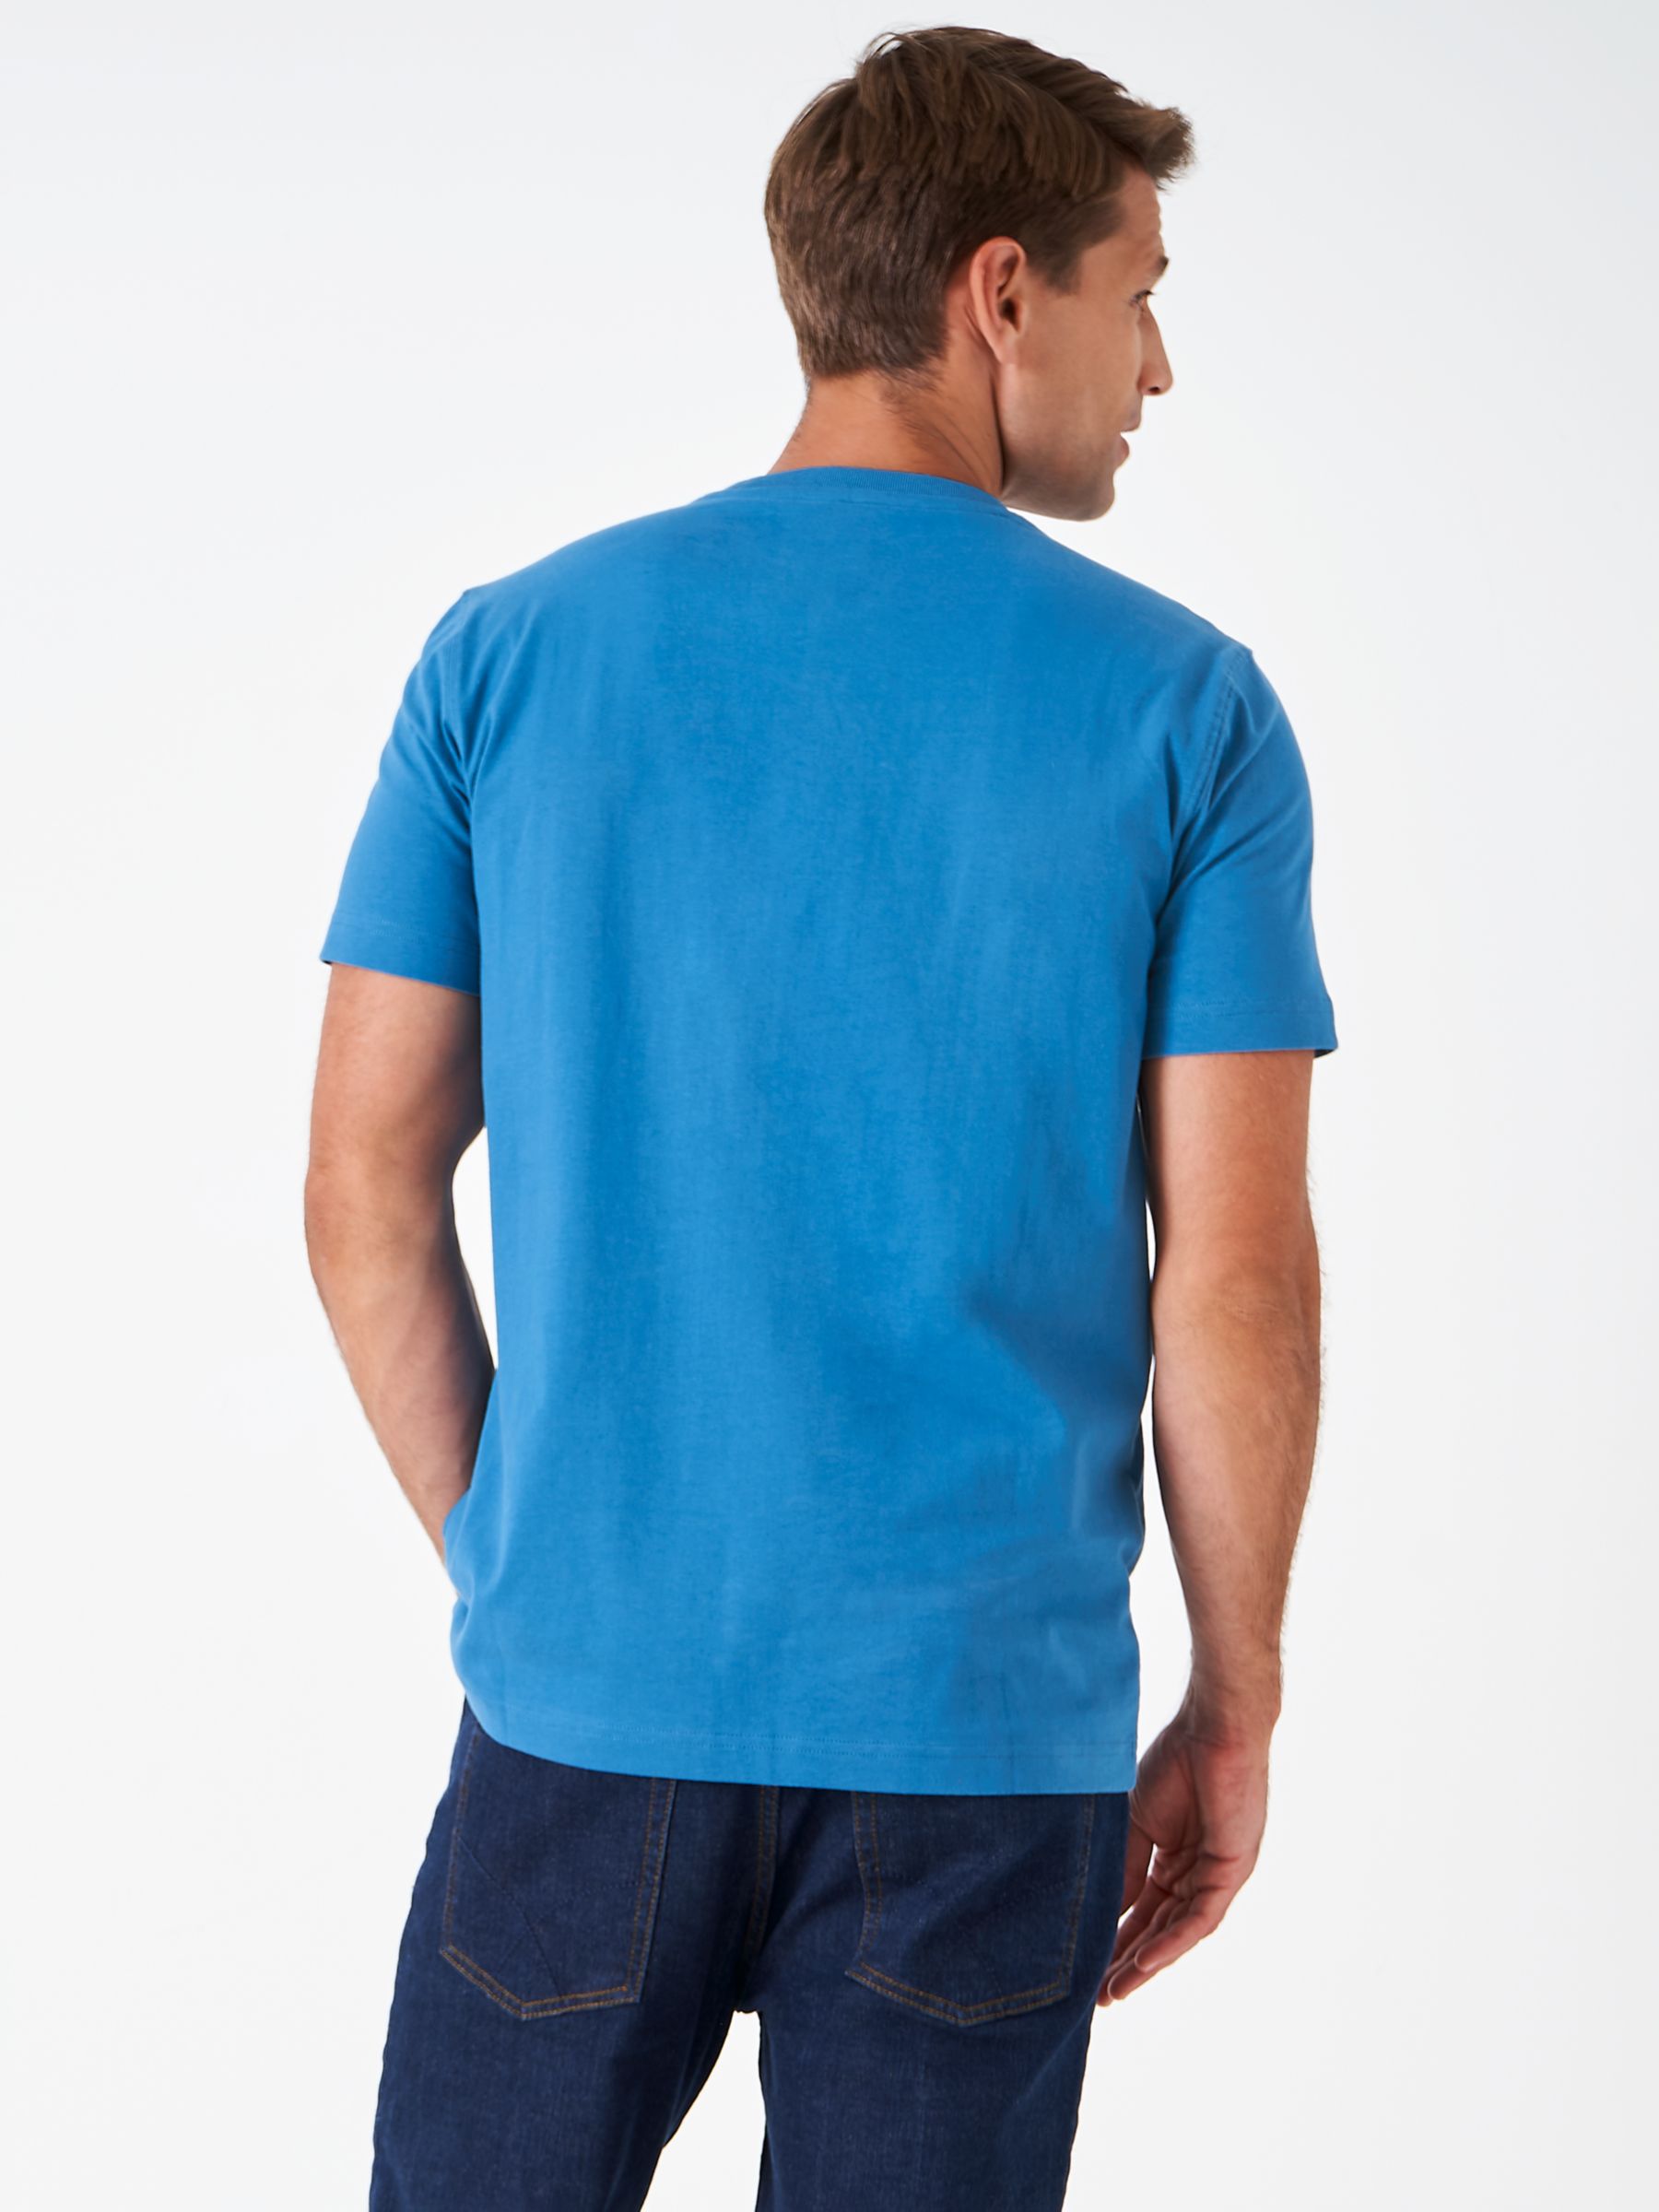 Crew Clothing Crew Neck T-Shirt, Bright Blue, XS